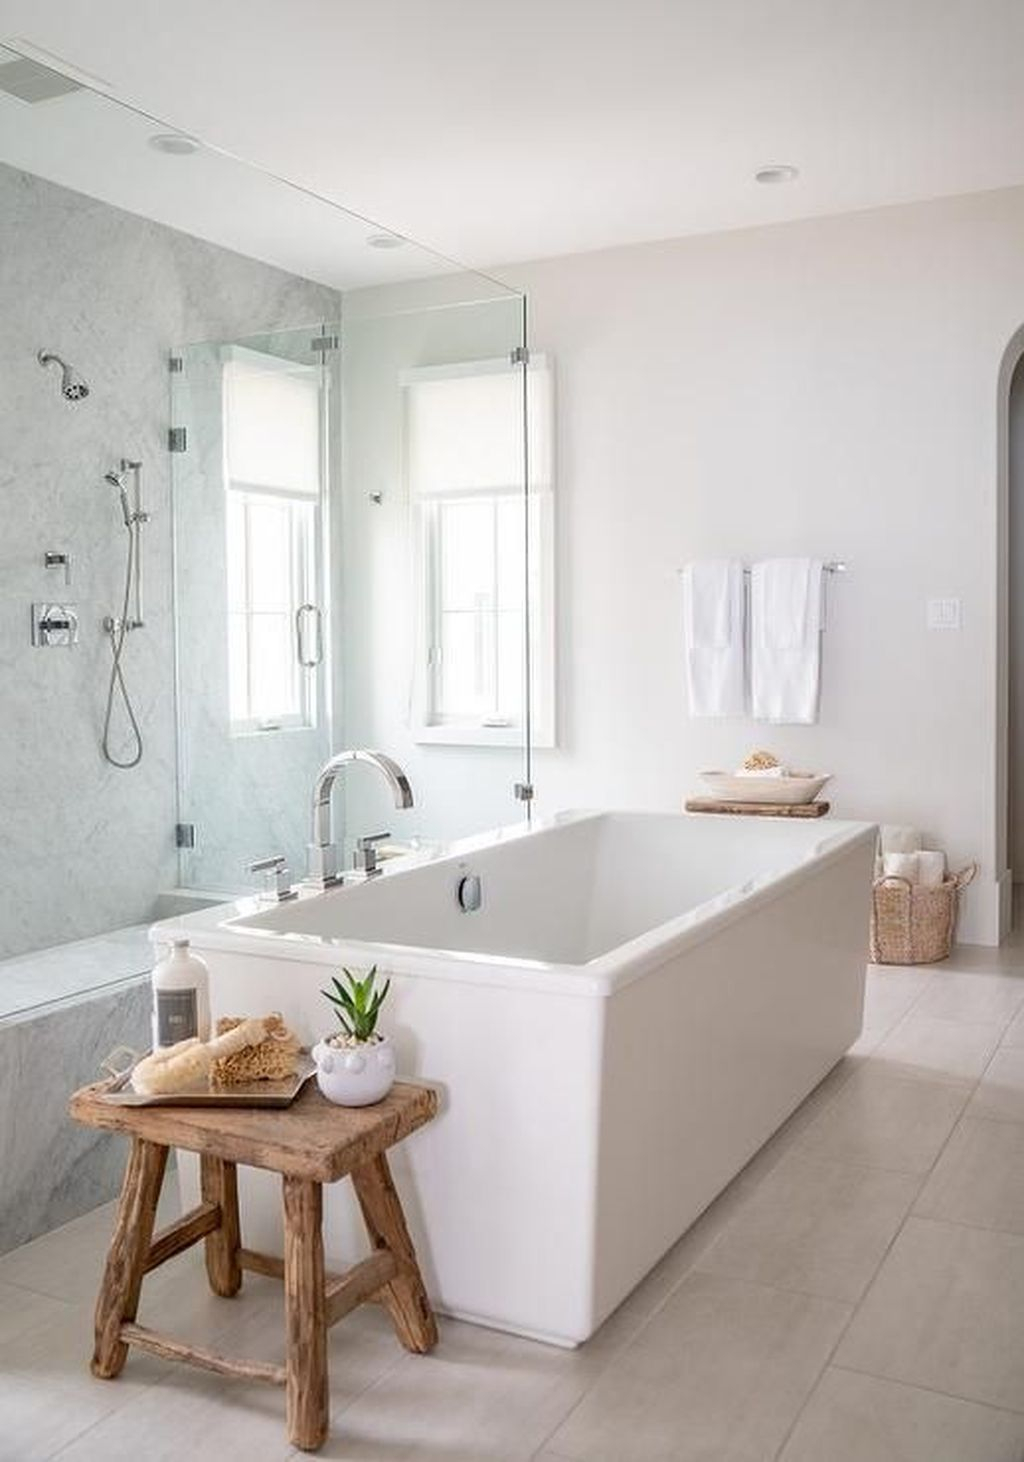 Marvelous Wooden Shower Floor Tiles Designs Ideas For Bathroom Remodel 25